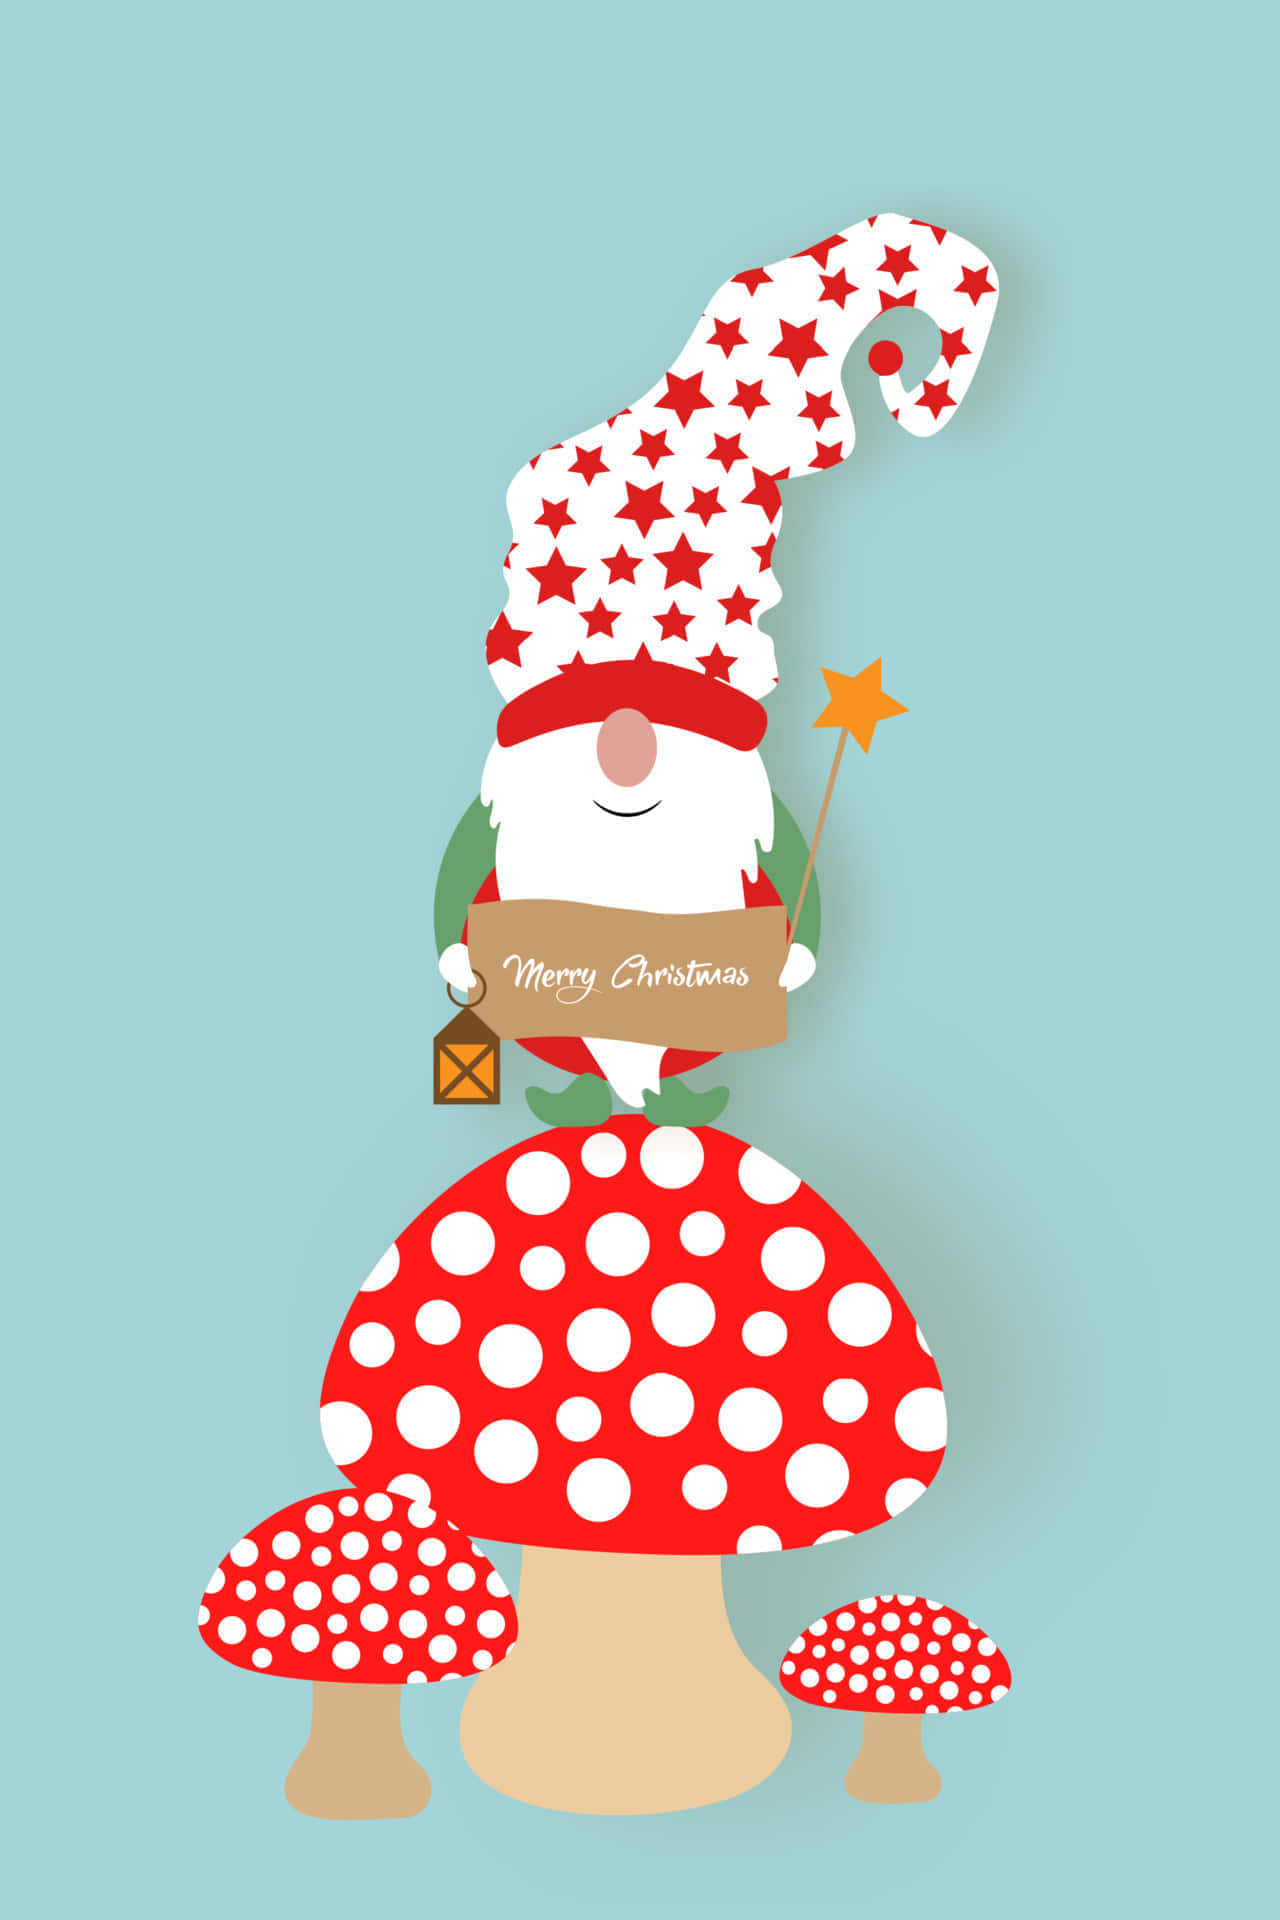 Christmas Gnome With Mushroomsand Stars Hat Wallpaper